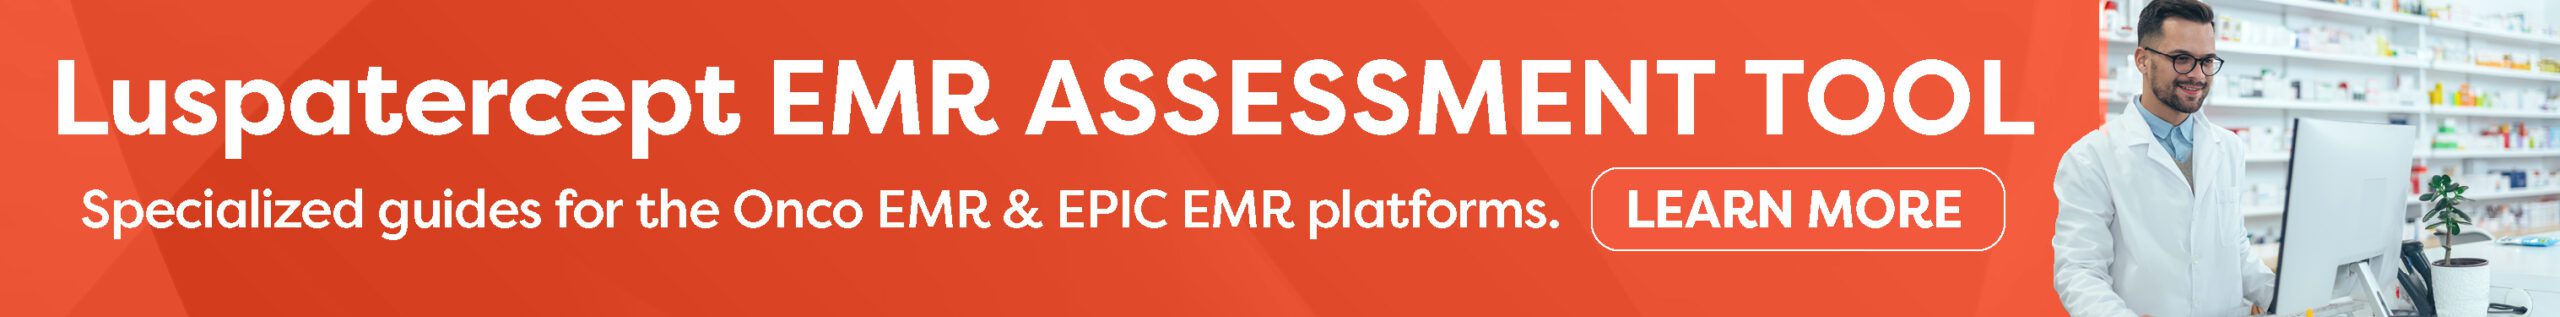 EMR Assessment Tool